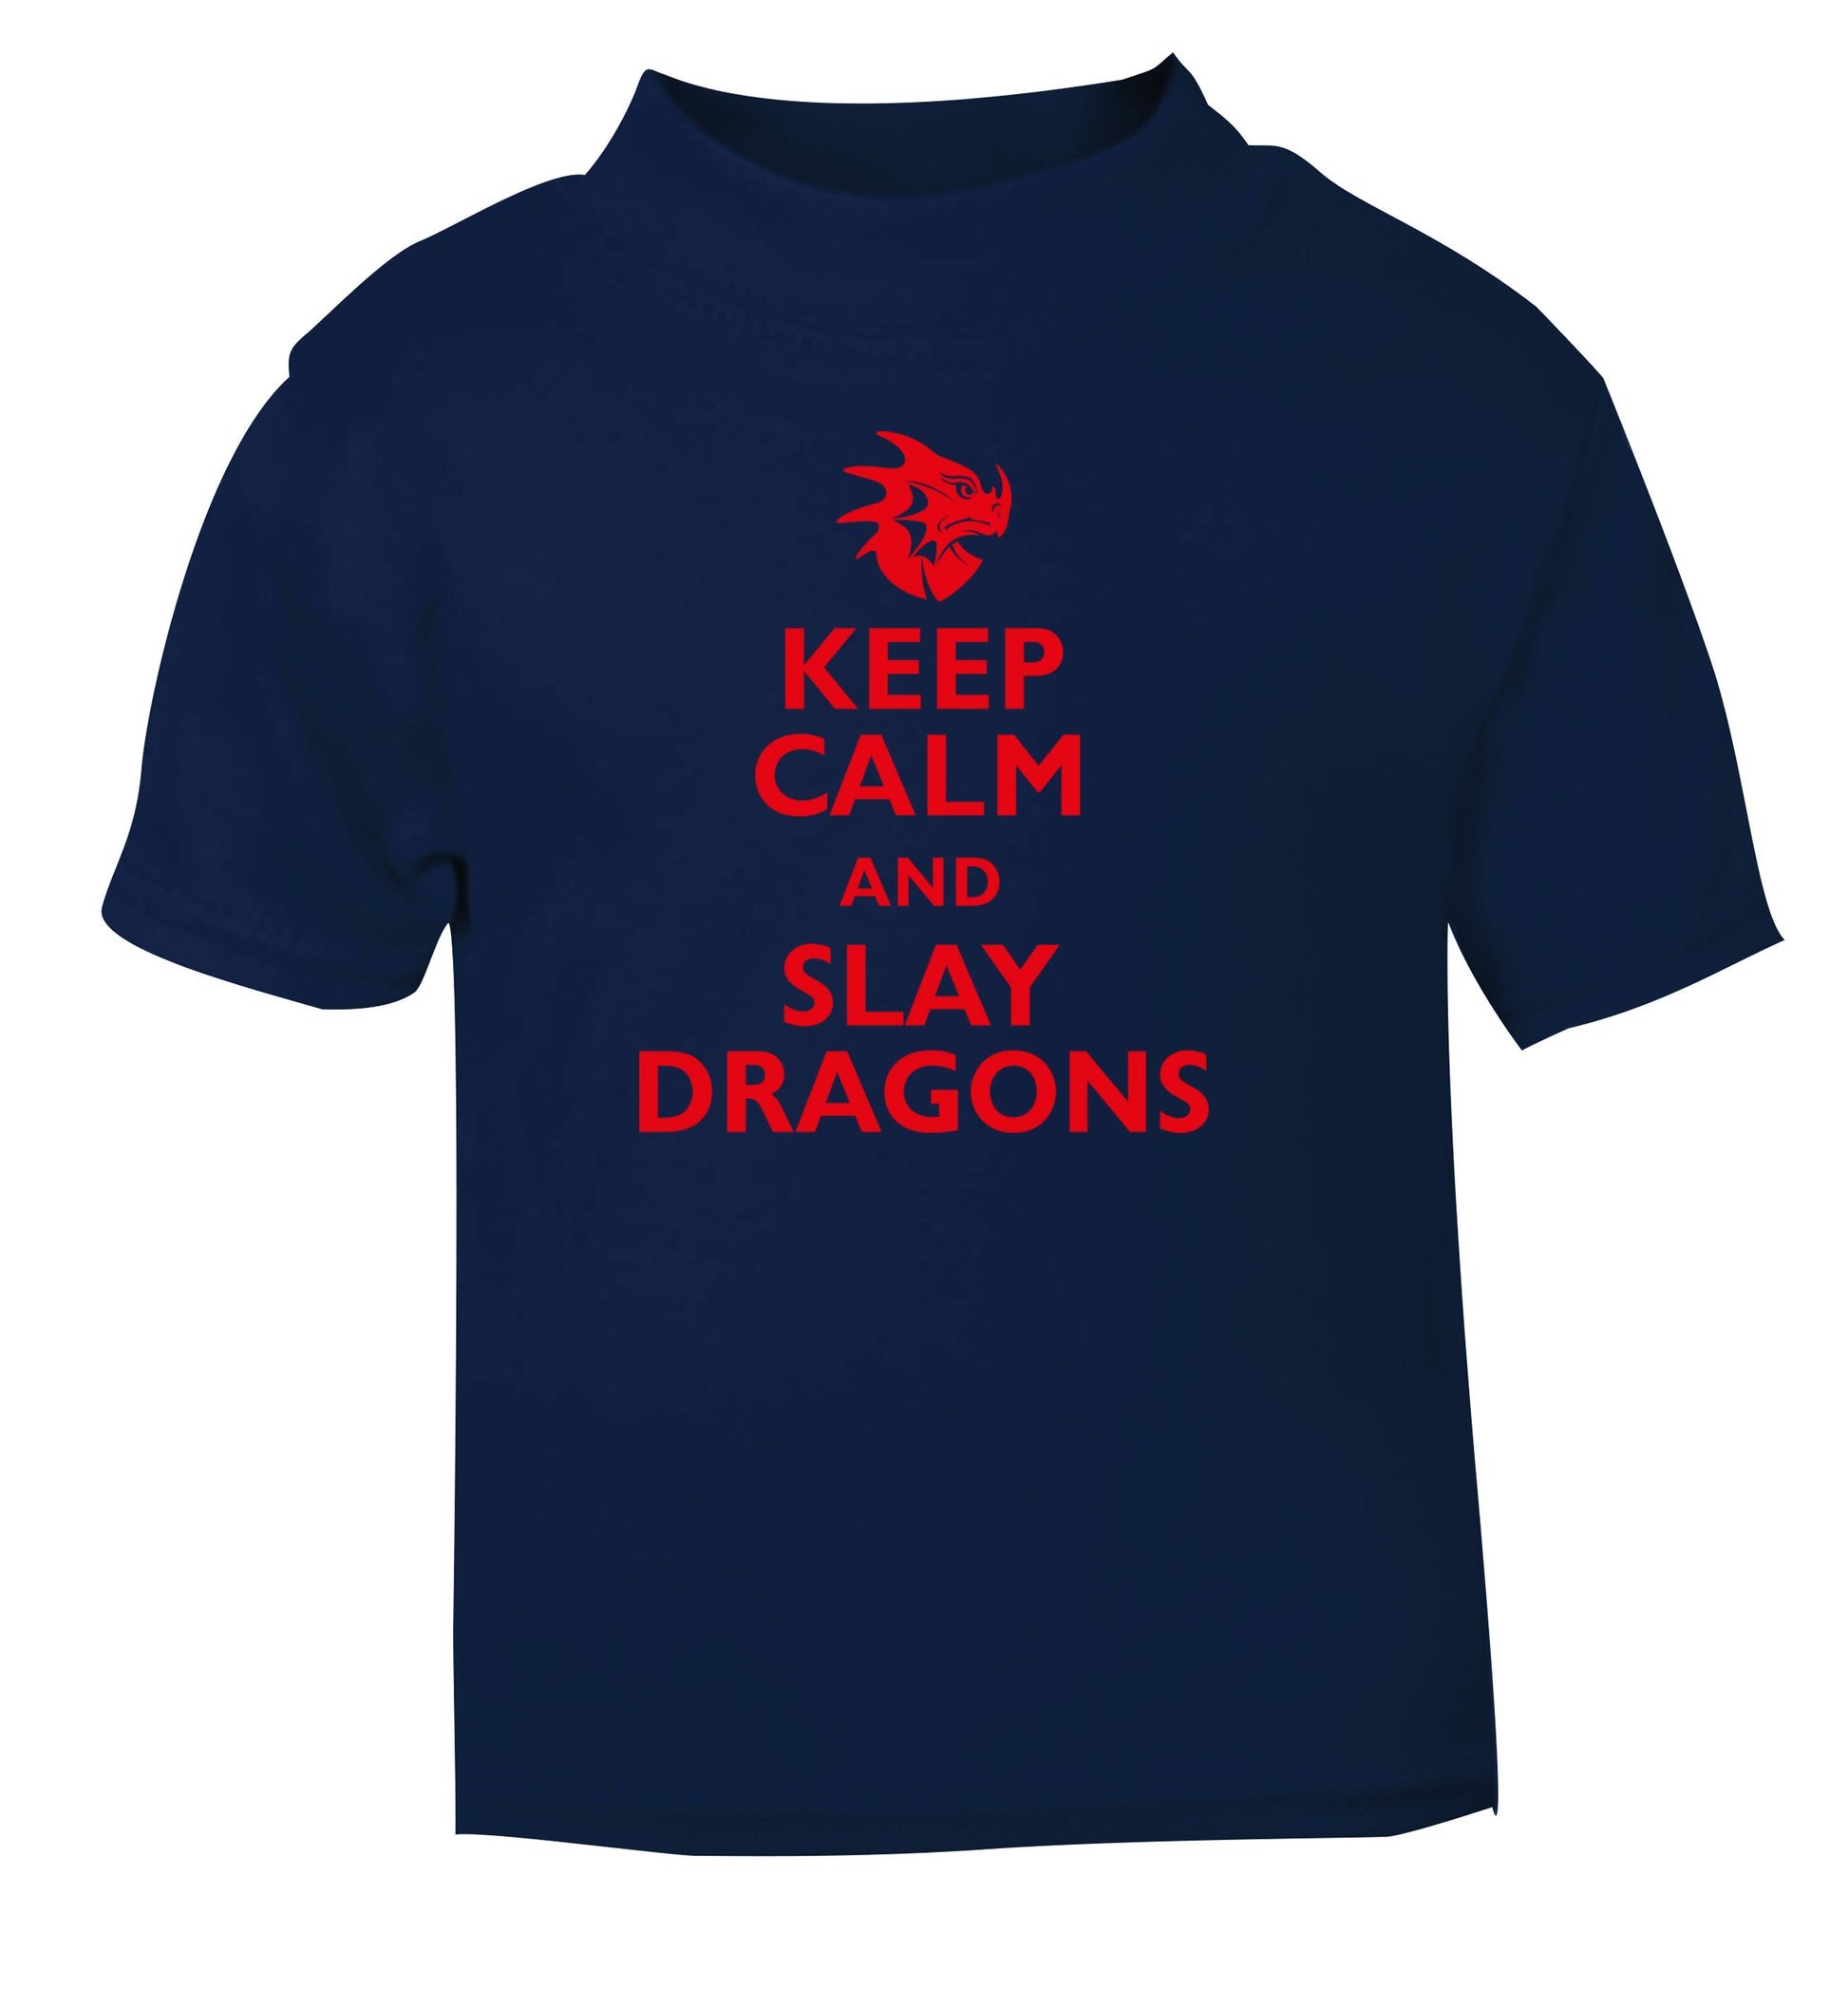 Keep calm and slay dragons navy Baby Toddler Tshirt 2 Years